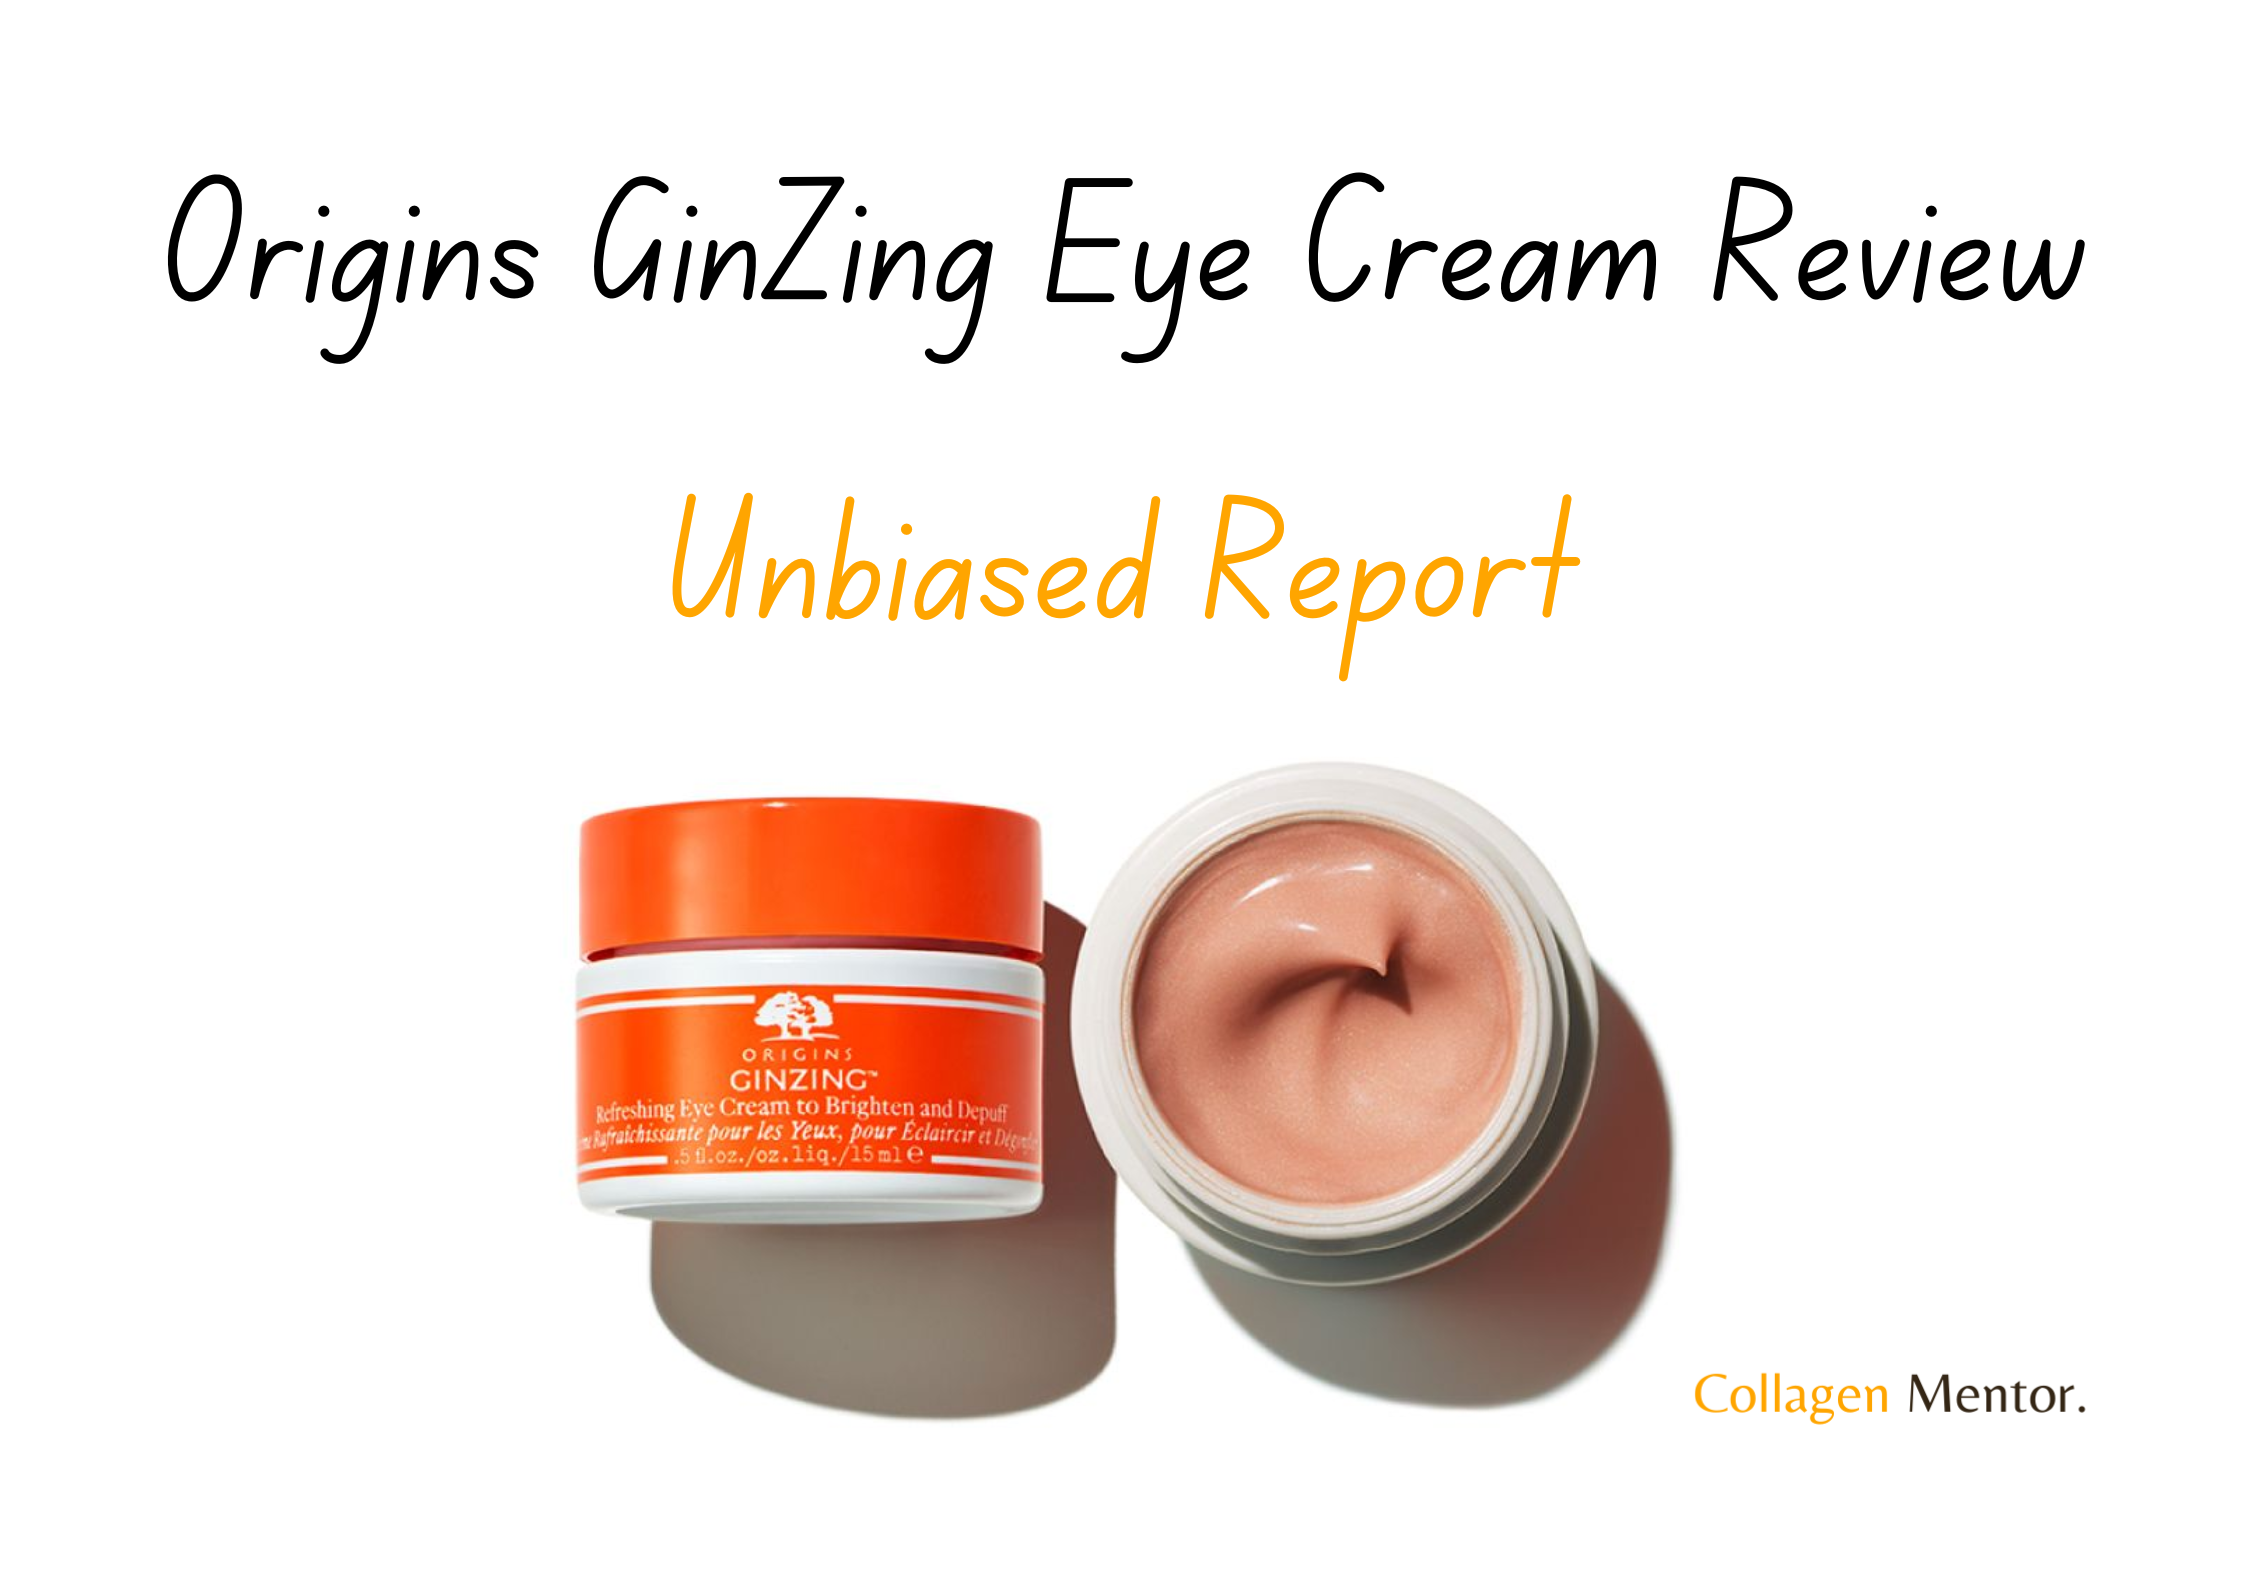 Origins GinZing Eye Cream Review